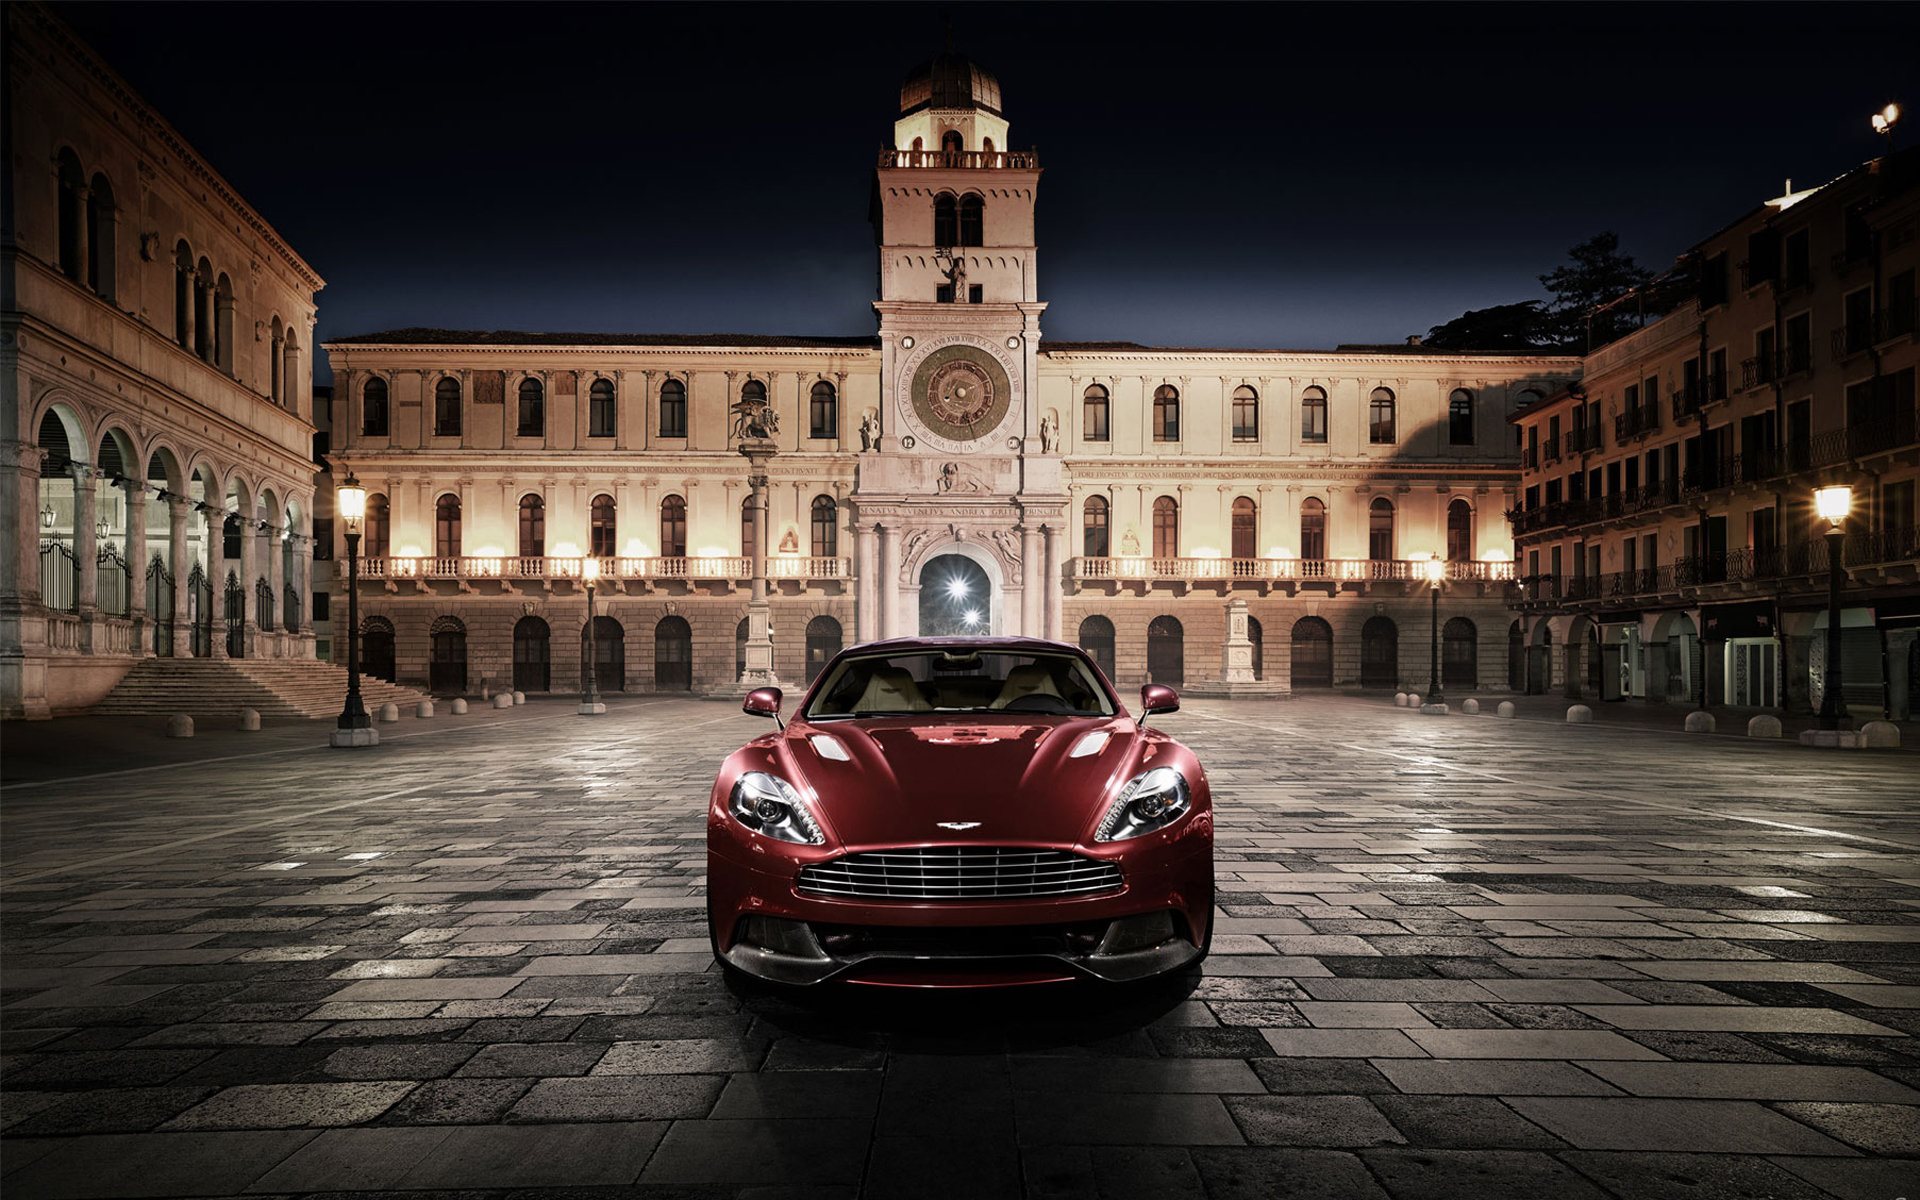 Vehicles Aston Martin Vanquish HD Wallpaper | Background Image